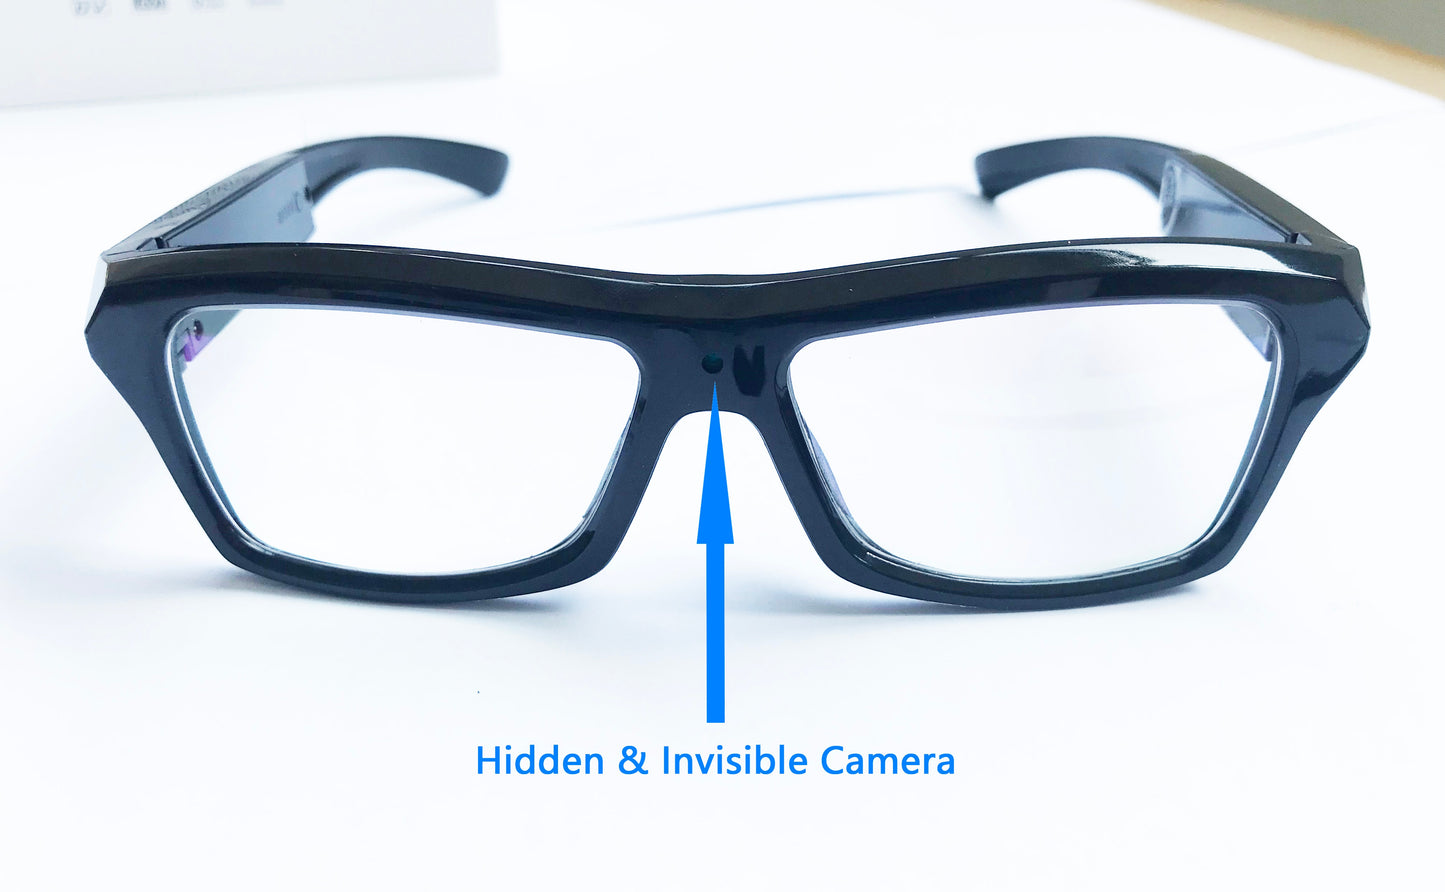 4K UHD Camera Glasses 2704*1520px Mini Camcorder Flat Glass Video Recorder Sunglasses Camera Eyewear Body Cam for Hiking Riding